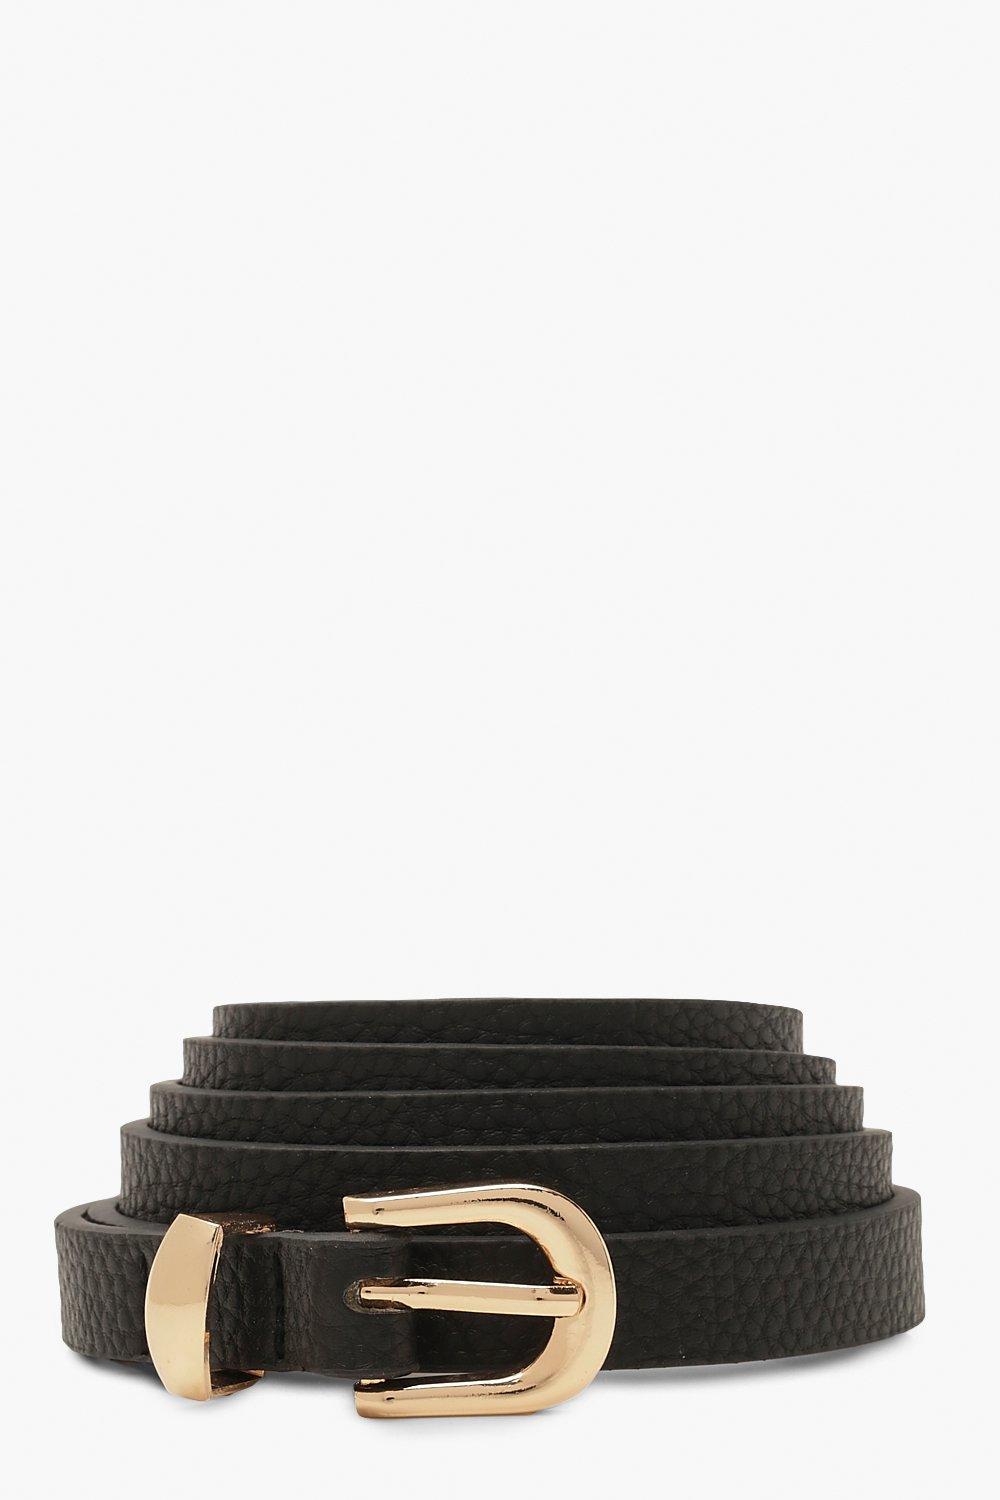 Plus Skinny Belt - Black - ONE SIZE